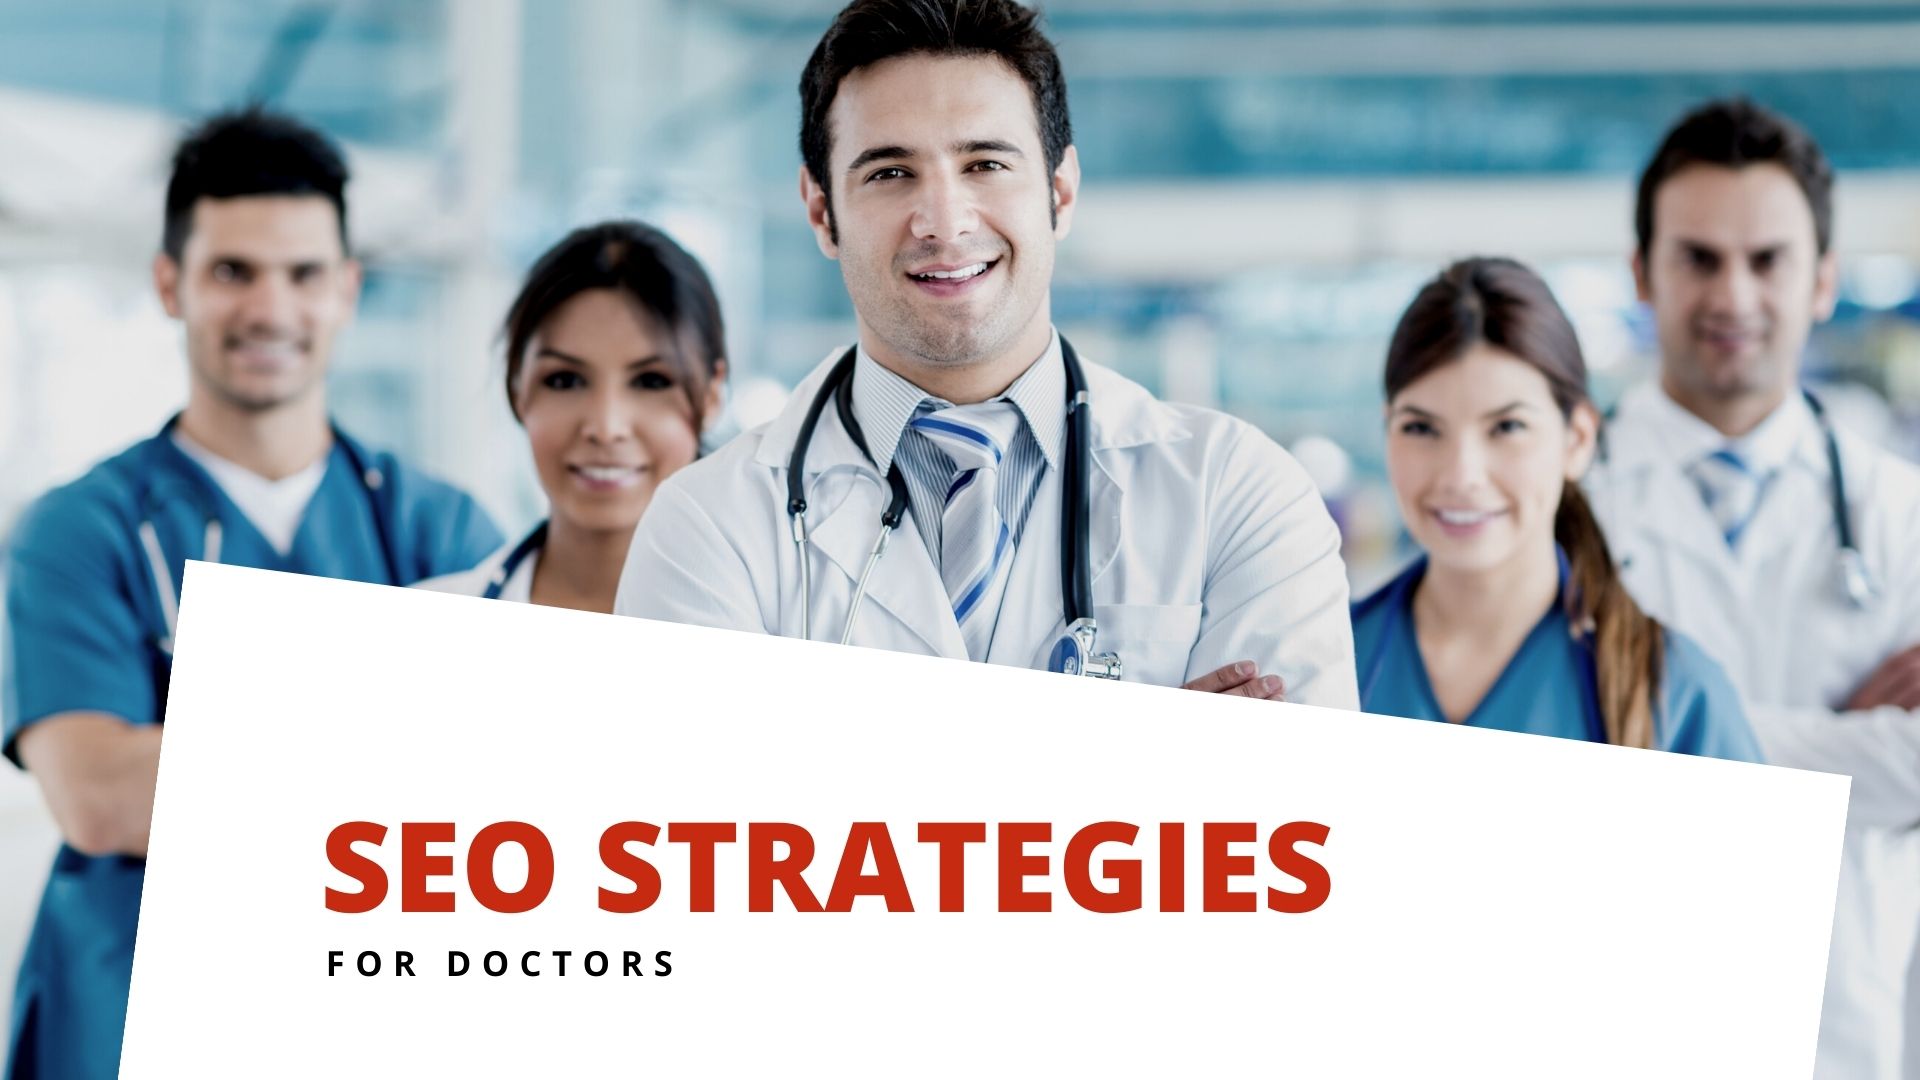 SEO for Doctors: Proven Strategies to Get More Patients Online